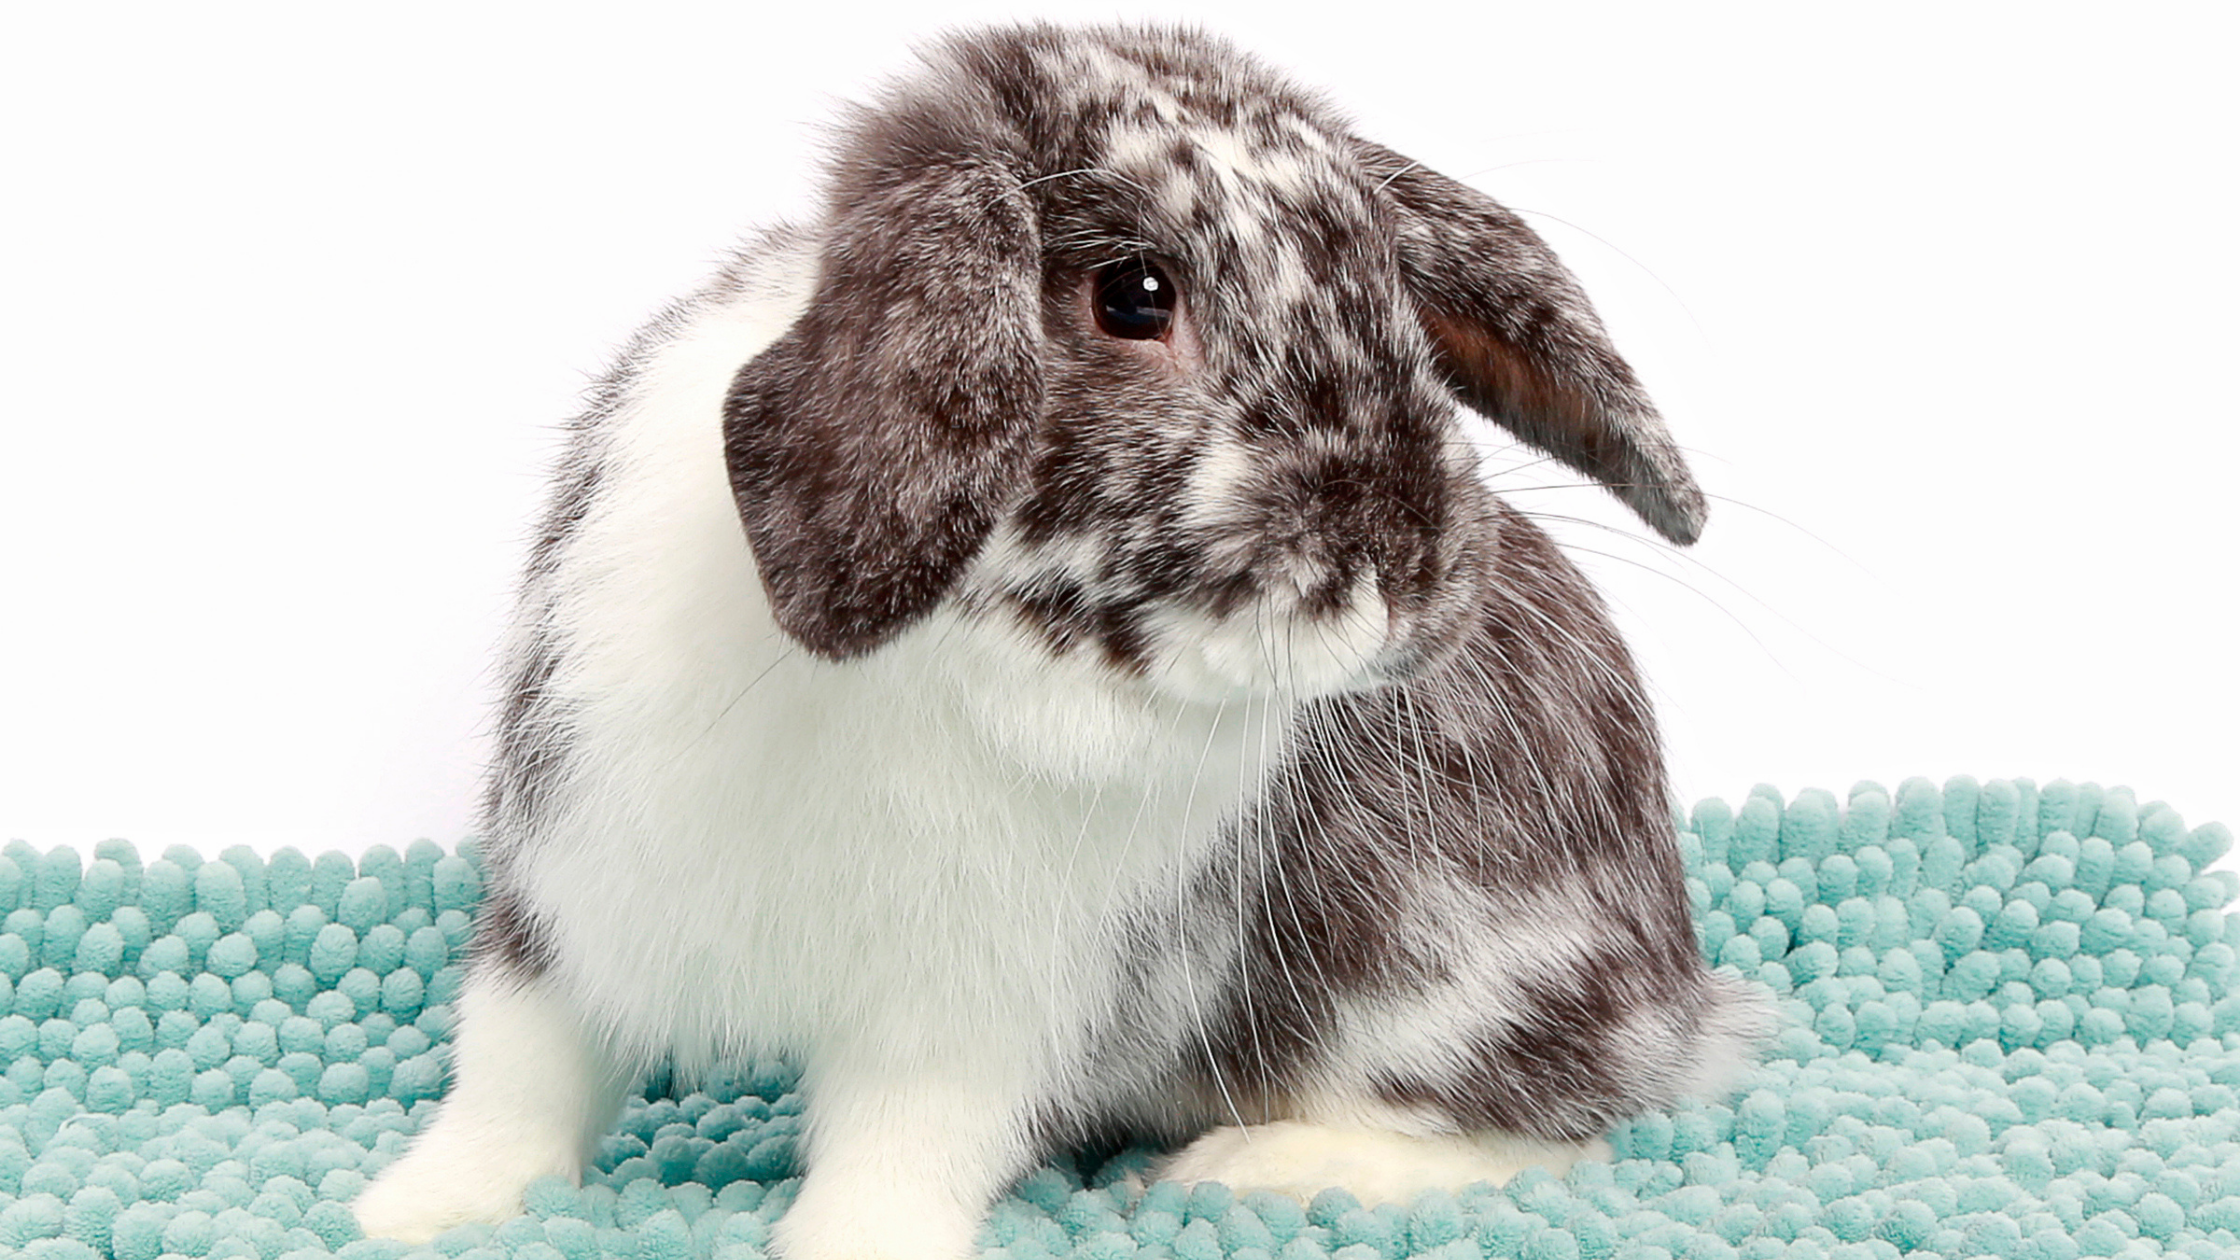 Do bunnies make great pets? You bet!